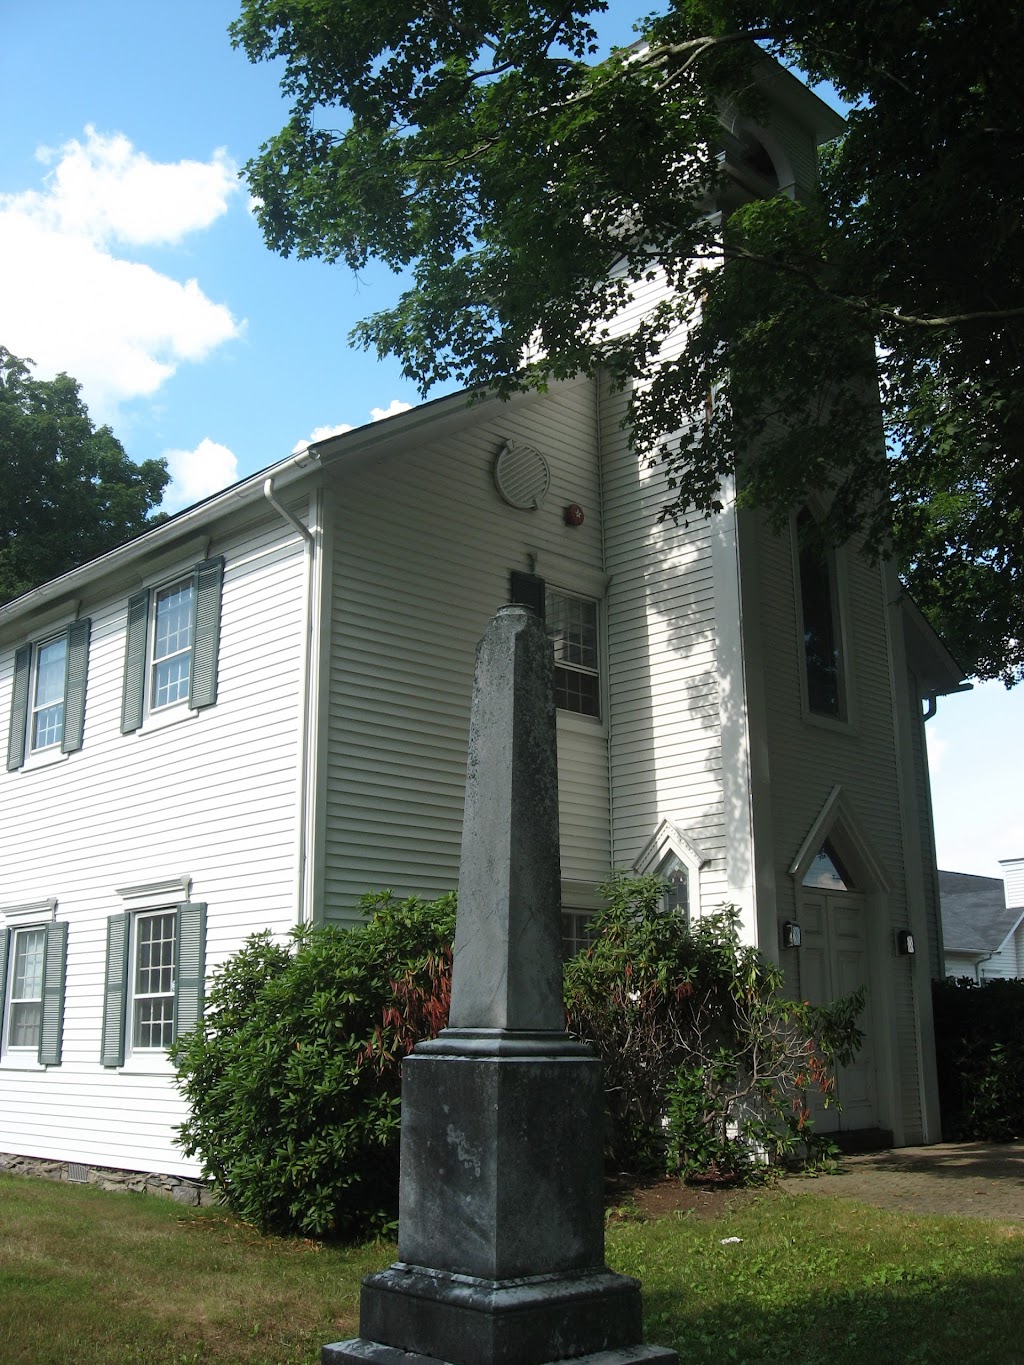 Middle Smithfield Presbyterian Church | 5205 Milford Rd, East Stroudsburg, PA 18302 | Phone: (570) 223-8648